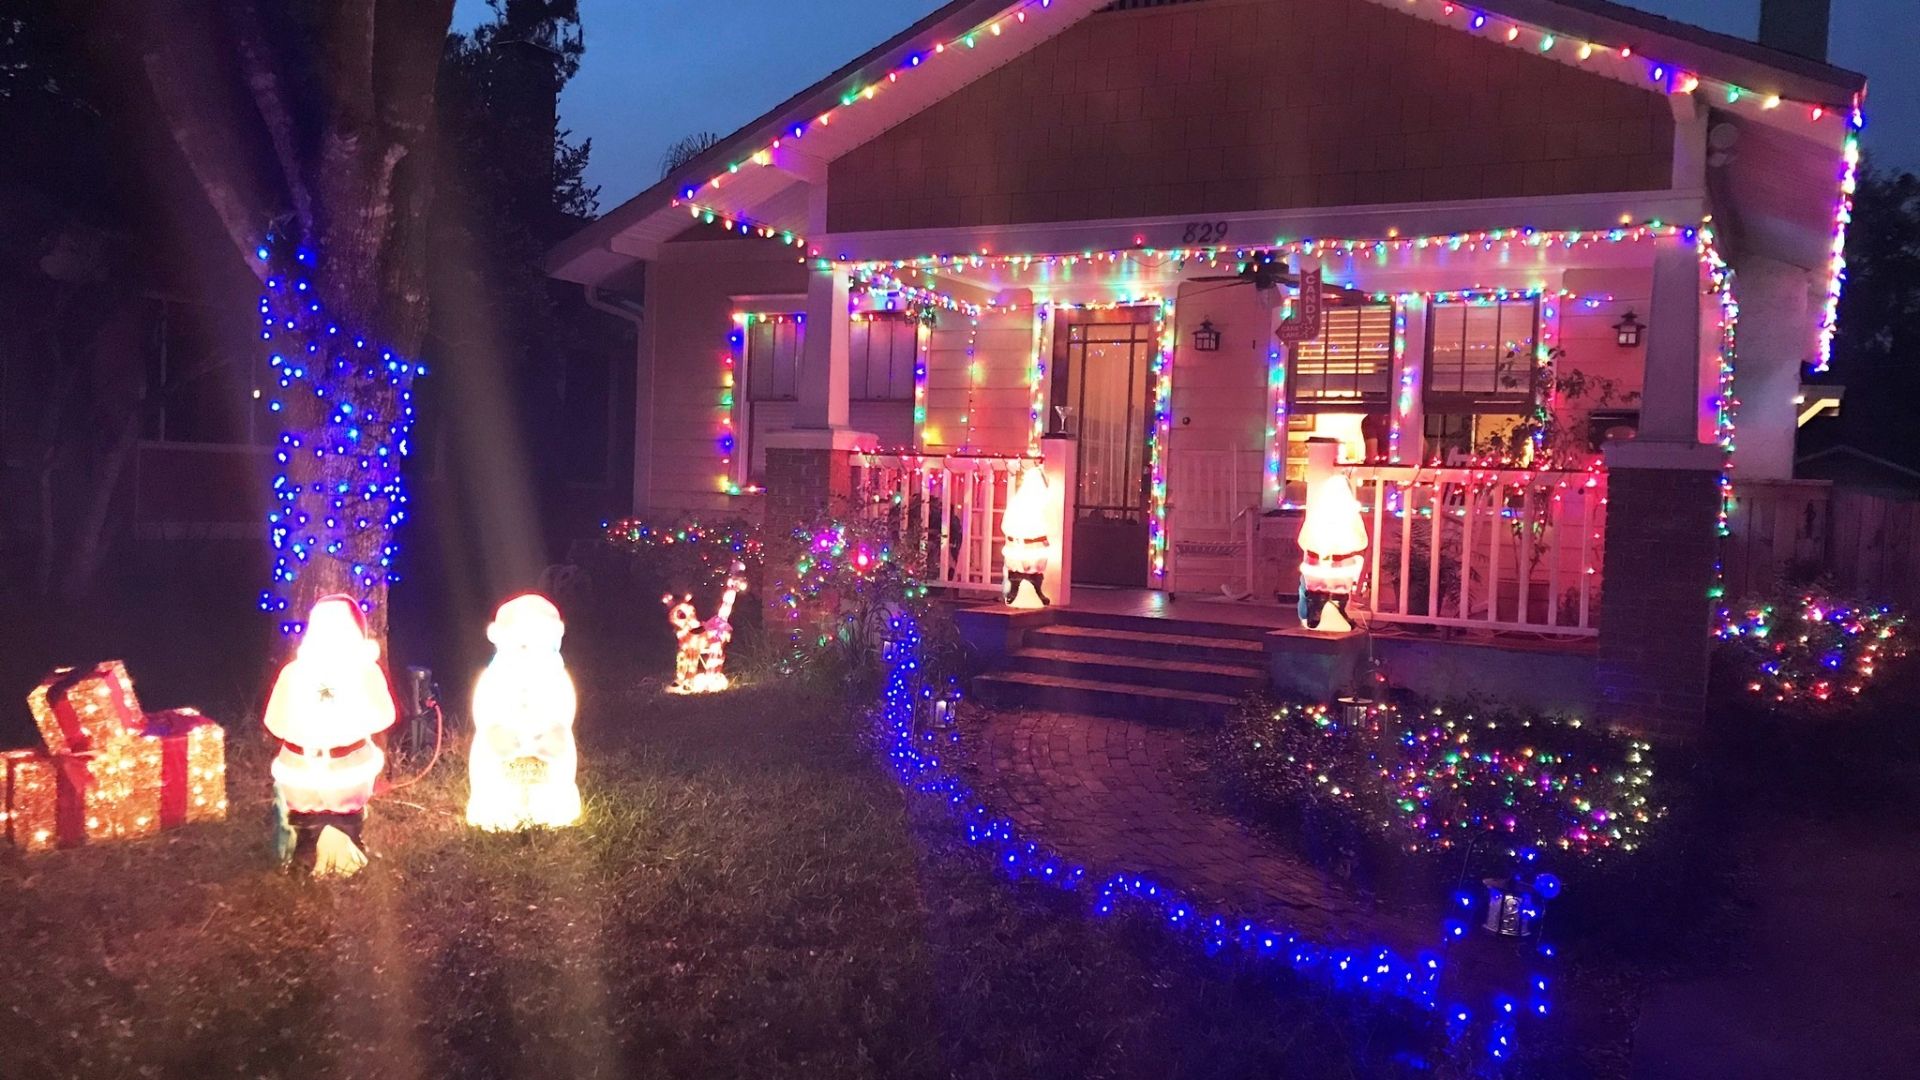 Bright Christmas light display Orlando: Here's why I do it